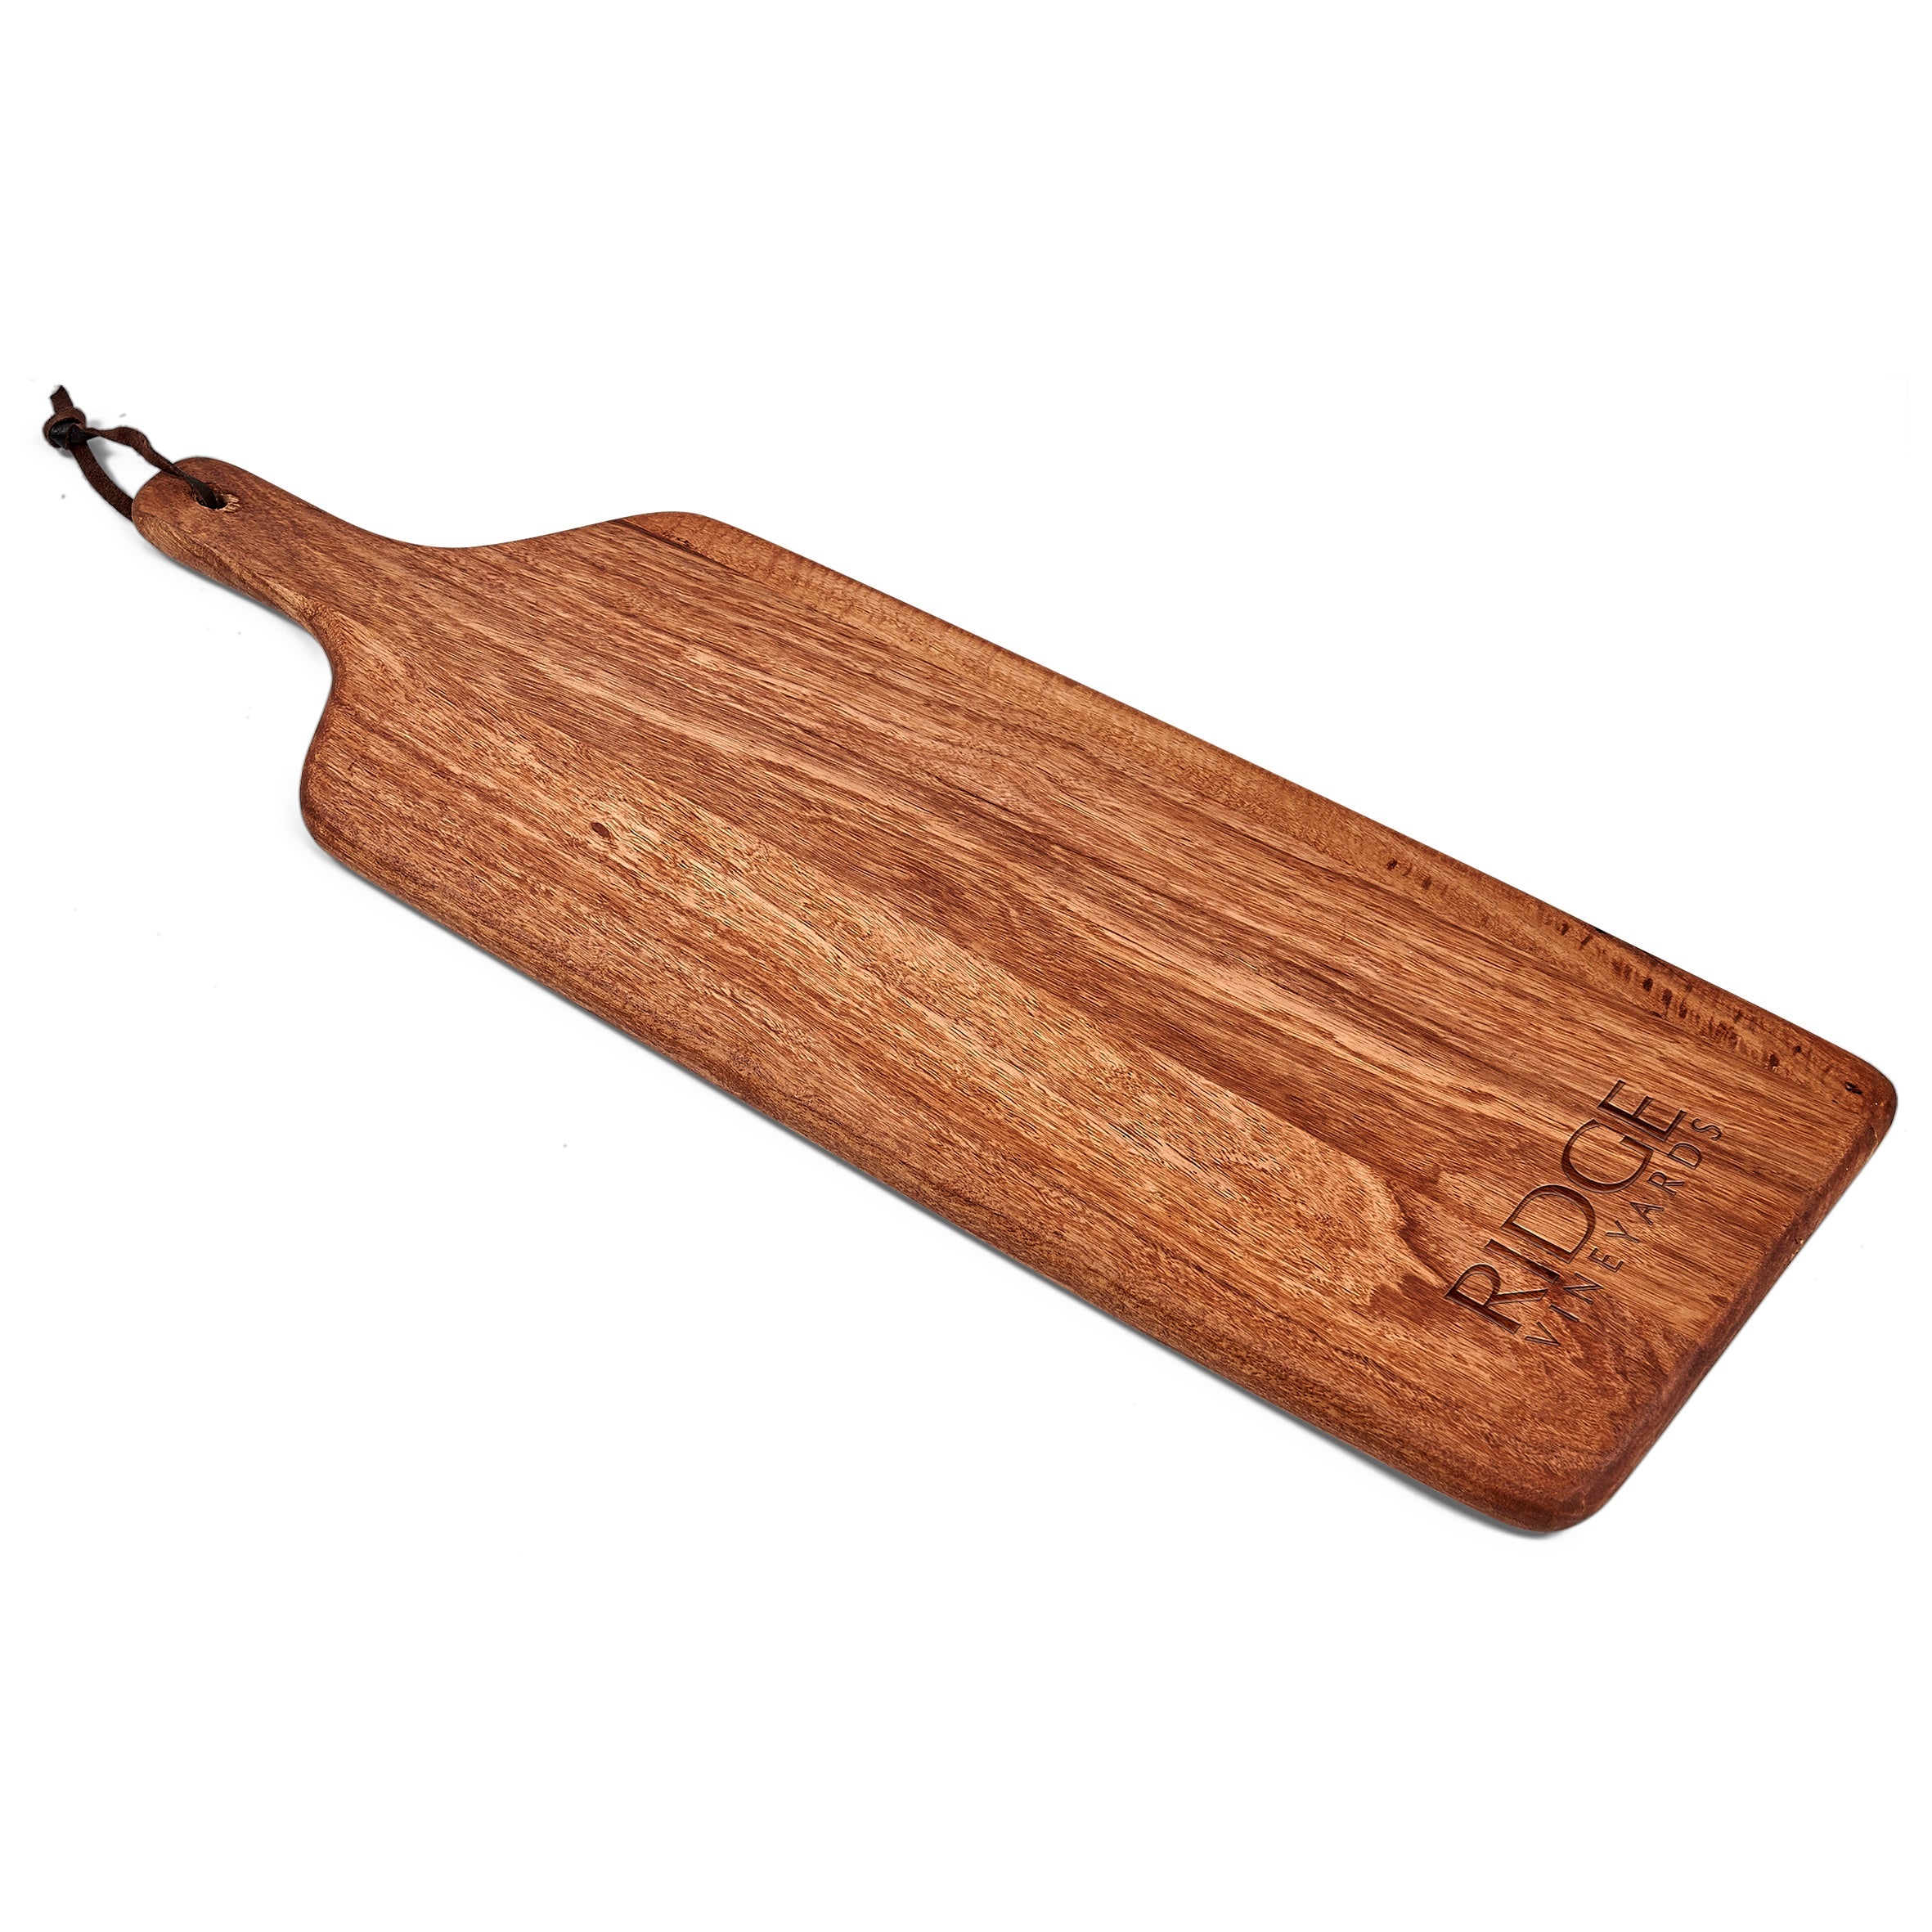 Homegrown Large Hardwood Paddle Board